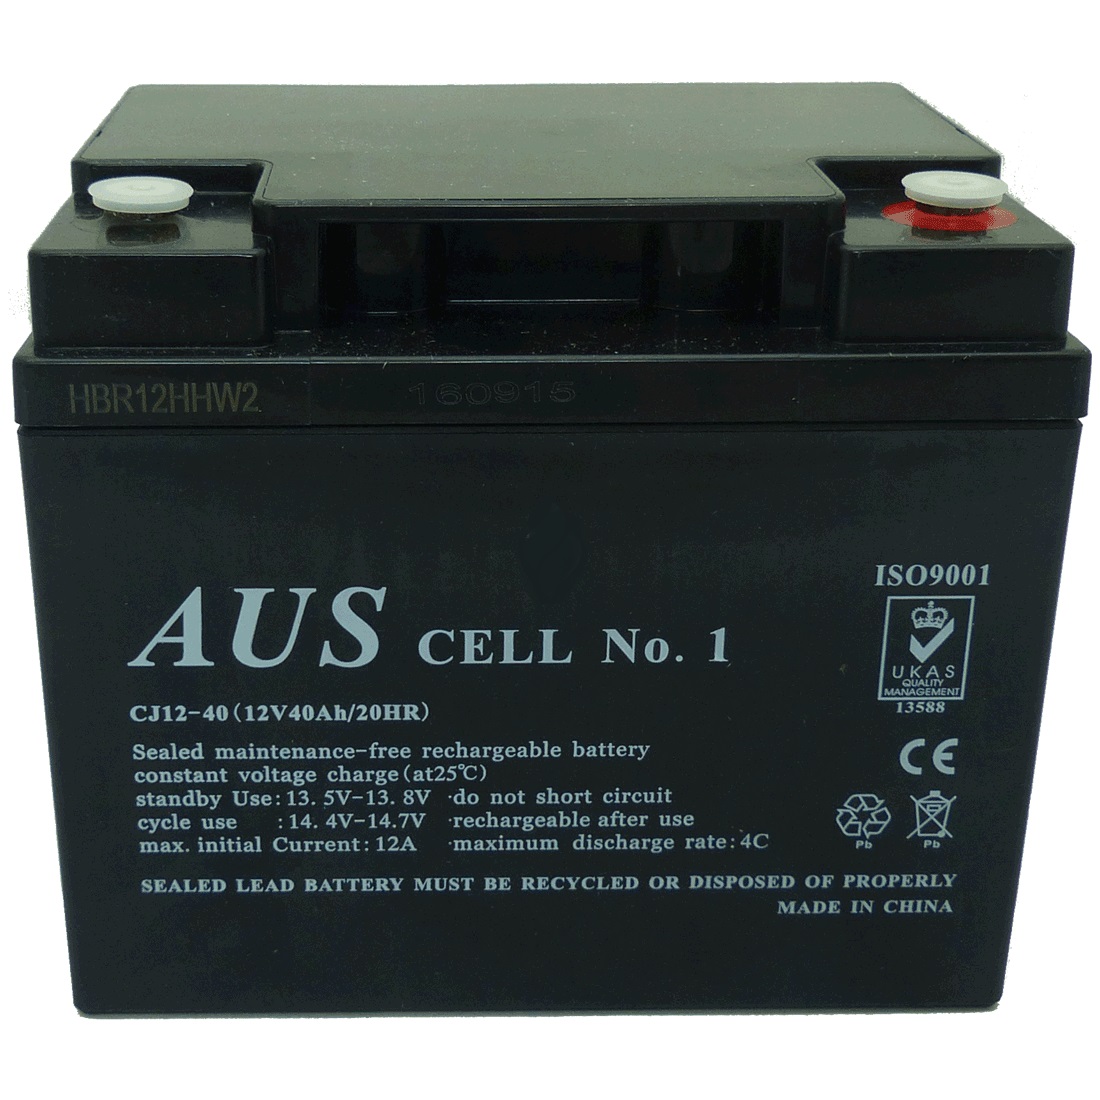 Sealed lead battery. Аккумулятор nyd 12-6 12volt 12ah Sealed lead - acid Battery. 12v 75ah Sealed lead acid Battery. Sealed Leas-acid Battery 6-DZM-12 ( 12v12ah ). Sealed lead -acid Battery cb4,5-12.